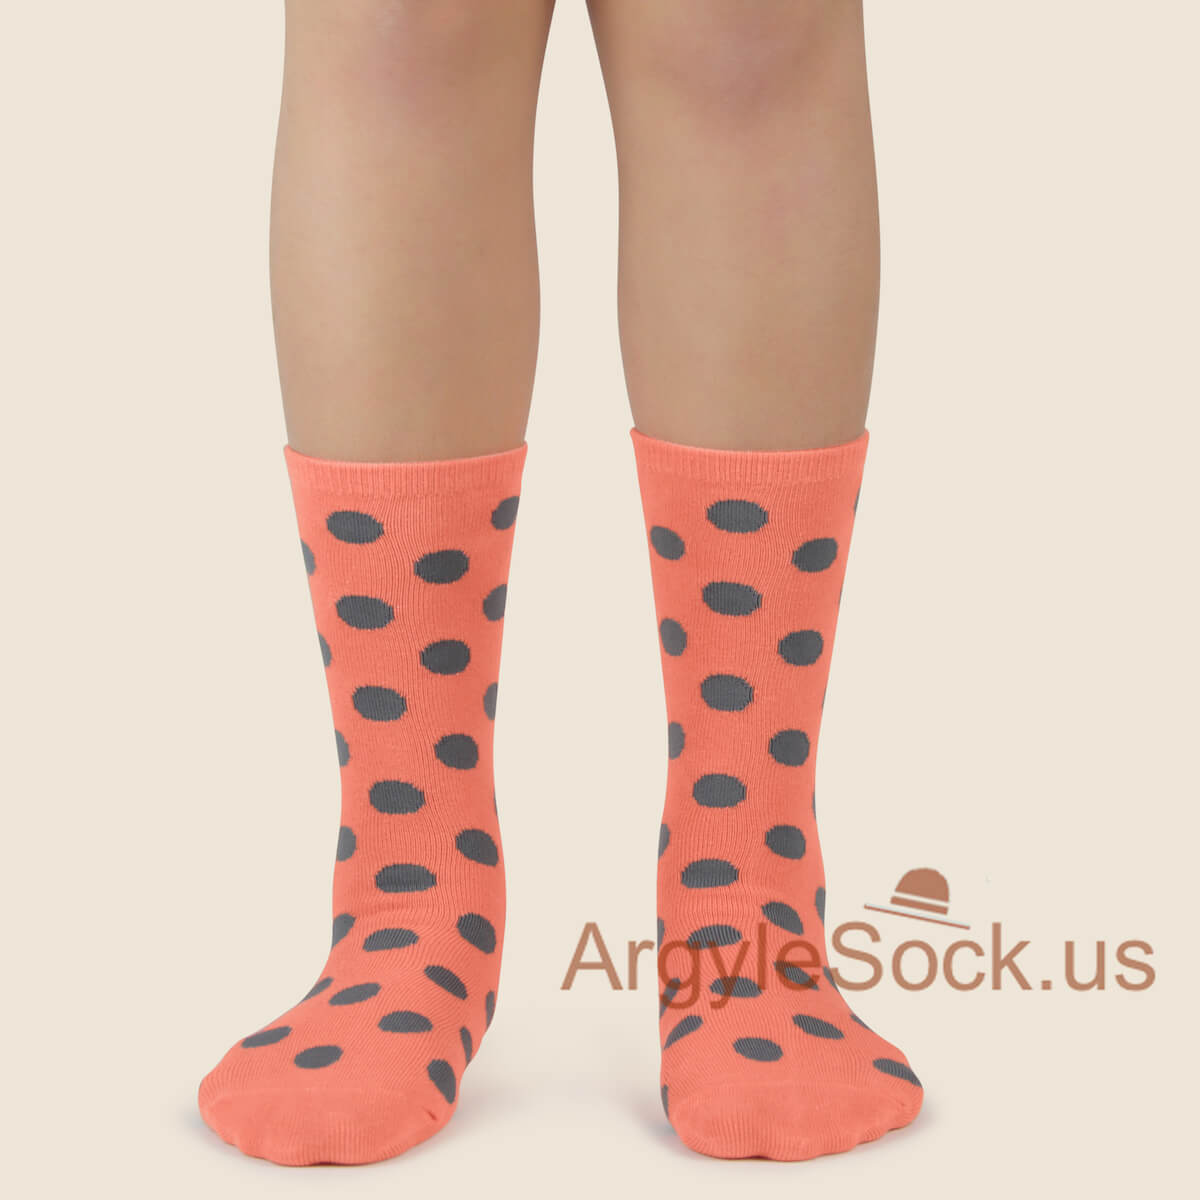 Peach and Grey Polka Dots Junior Groomsmen/Ring Bearer Socks